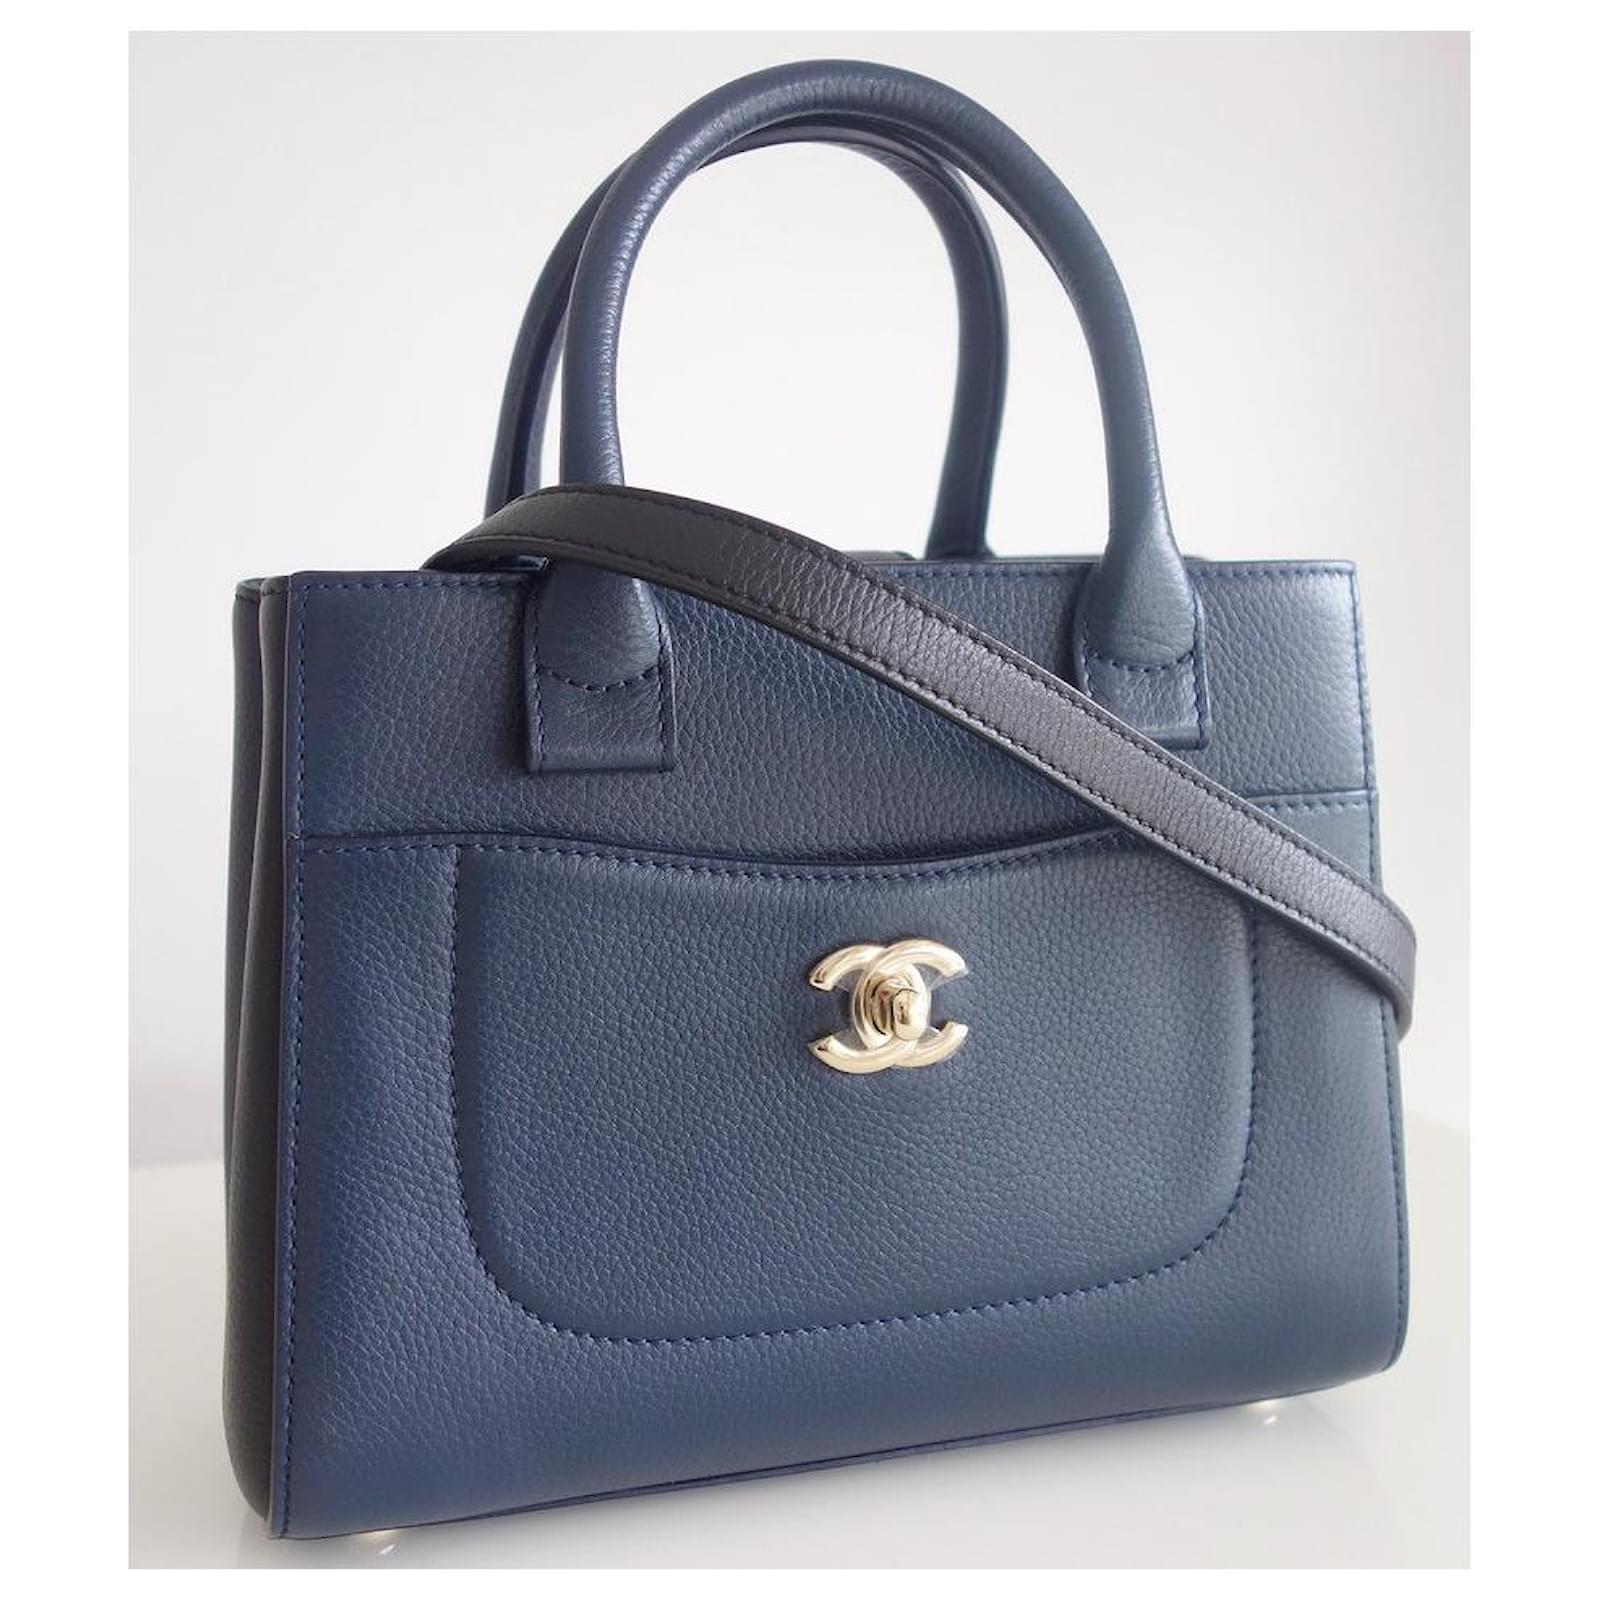 Handbags Chanel Neo Executive Chanel Two-Tone Bag